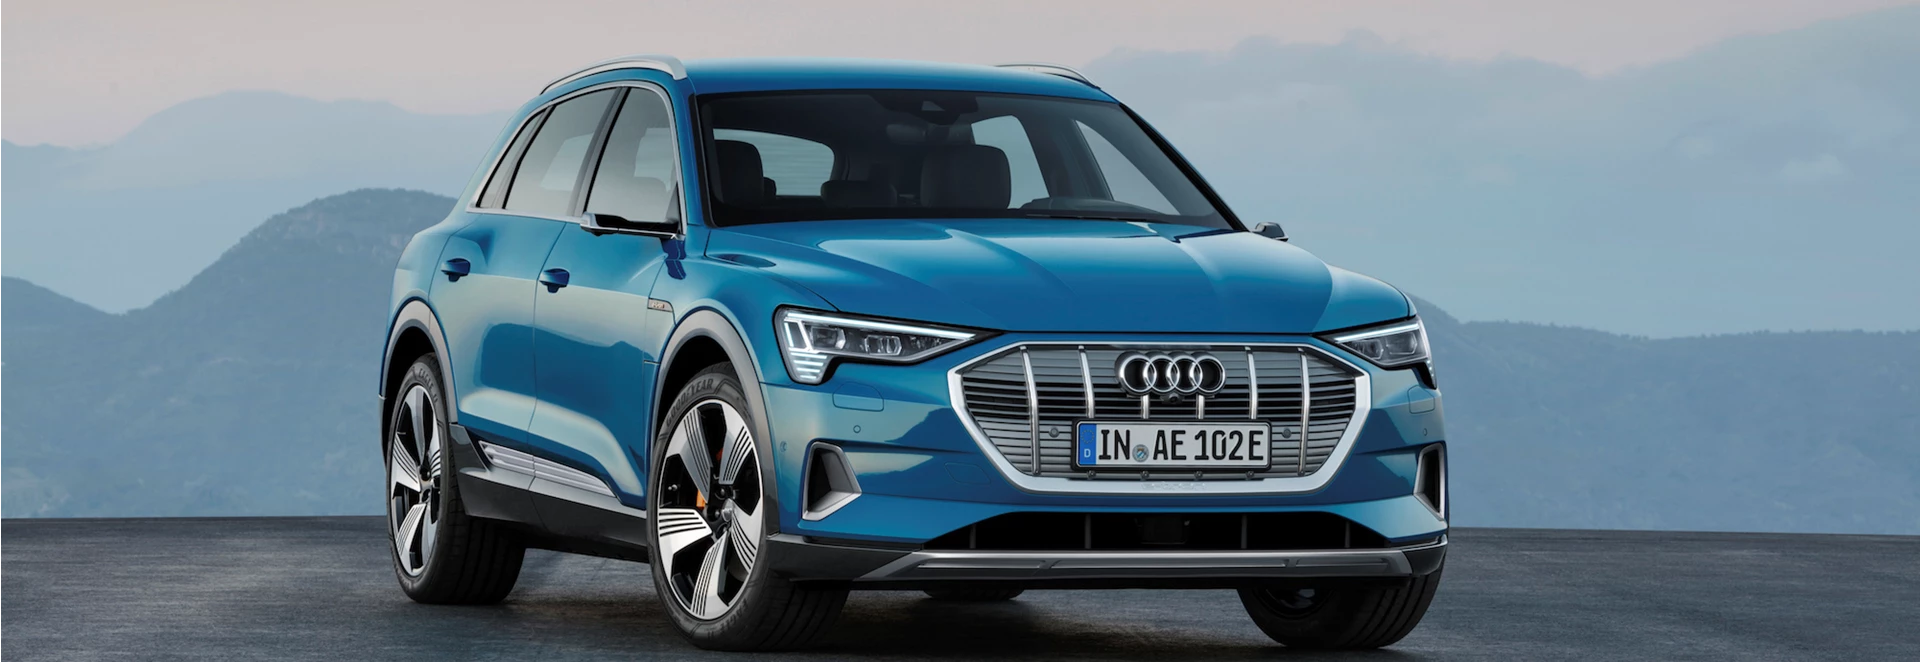 Audi unveils all-electric 2019 e-tron SUV 